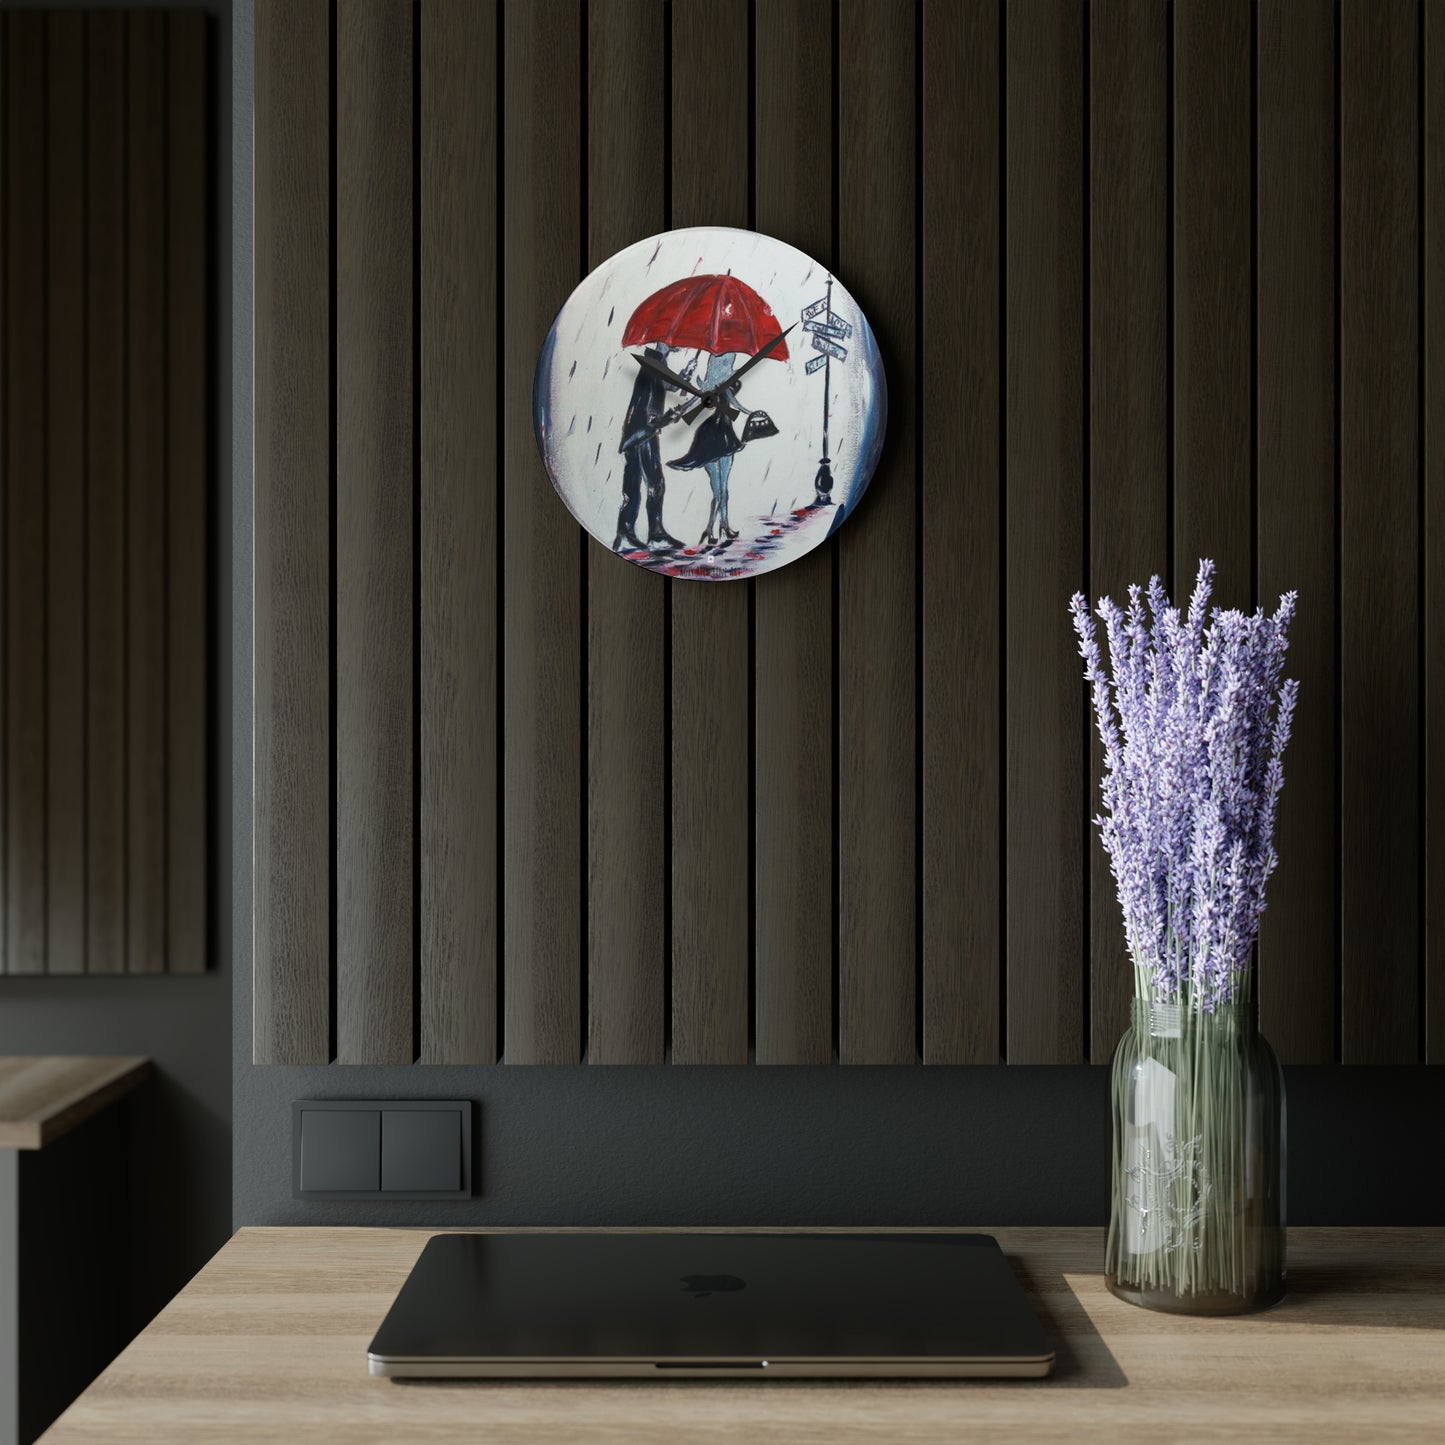 The Gentleman Romantic Acrylic Wall Clock